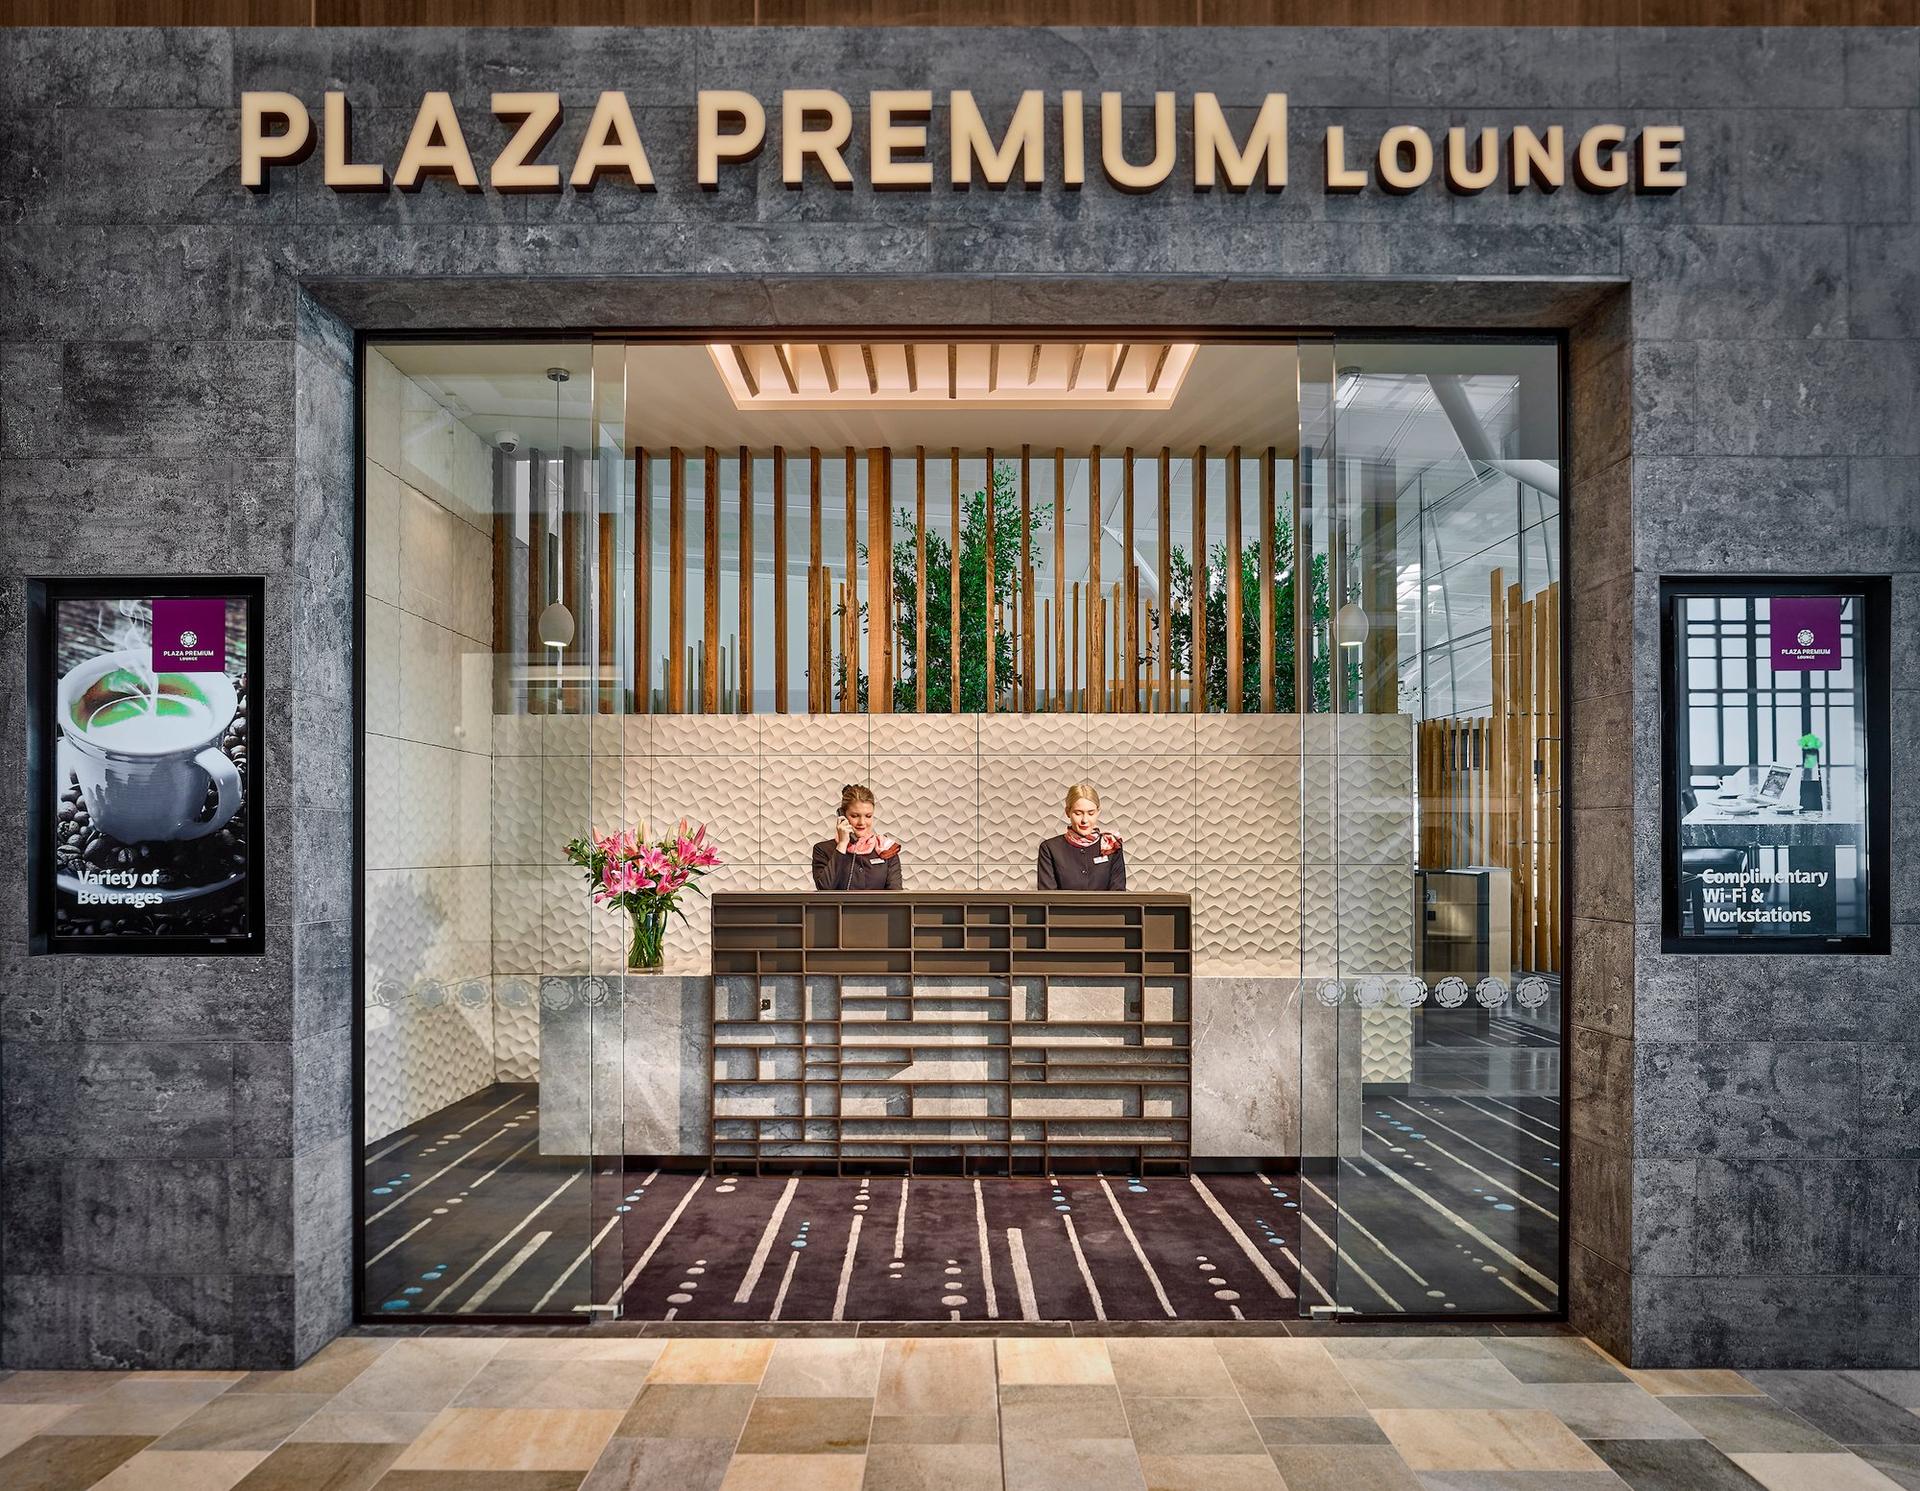 Plaza Premium Lounge image 23 of 23